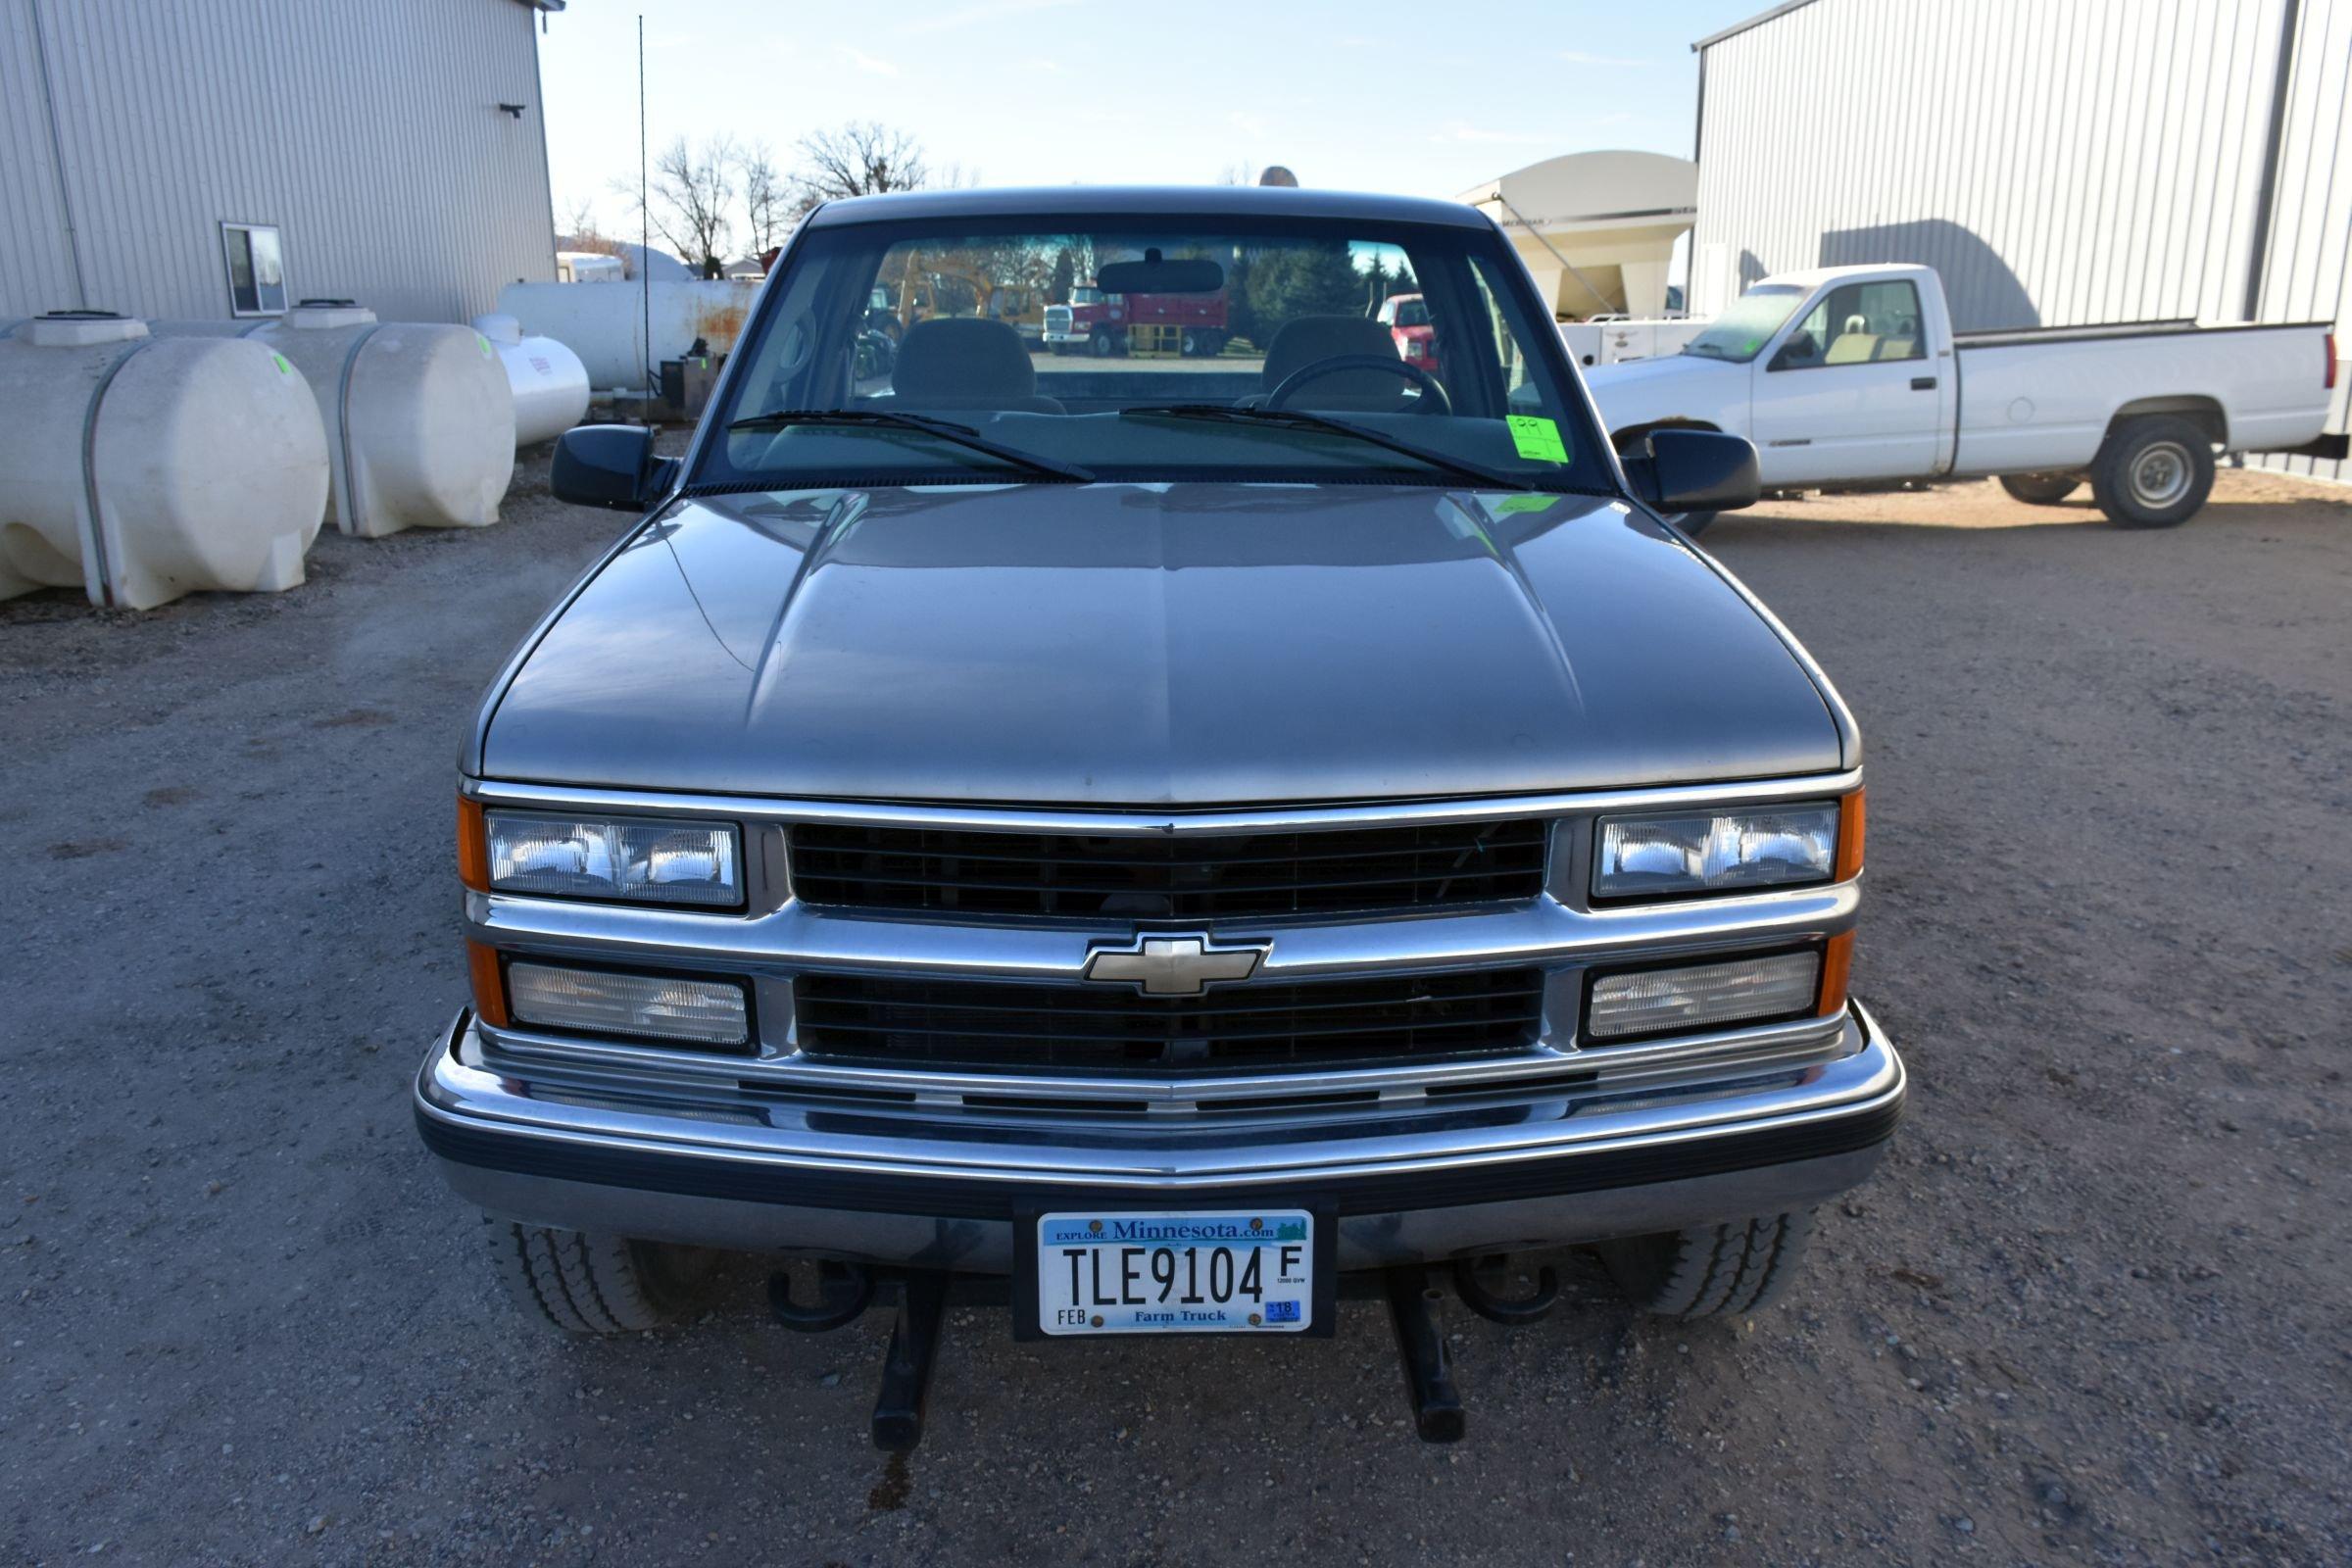 2000 Chevrolet 3500 Regular Cab, 8 Foot Box, 350 V8, Automatic, 4x4, 90,697 Miles, Sharp